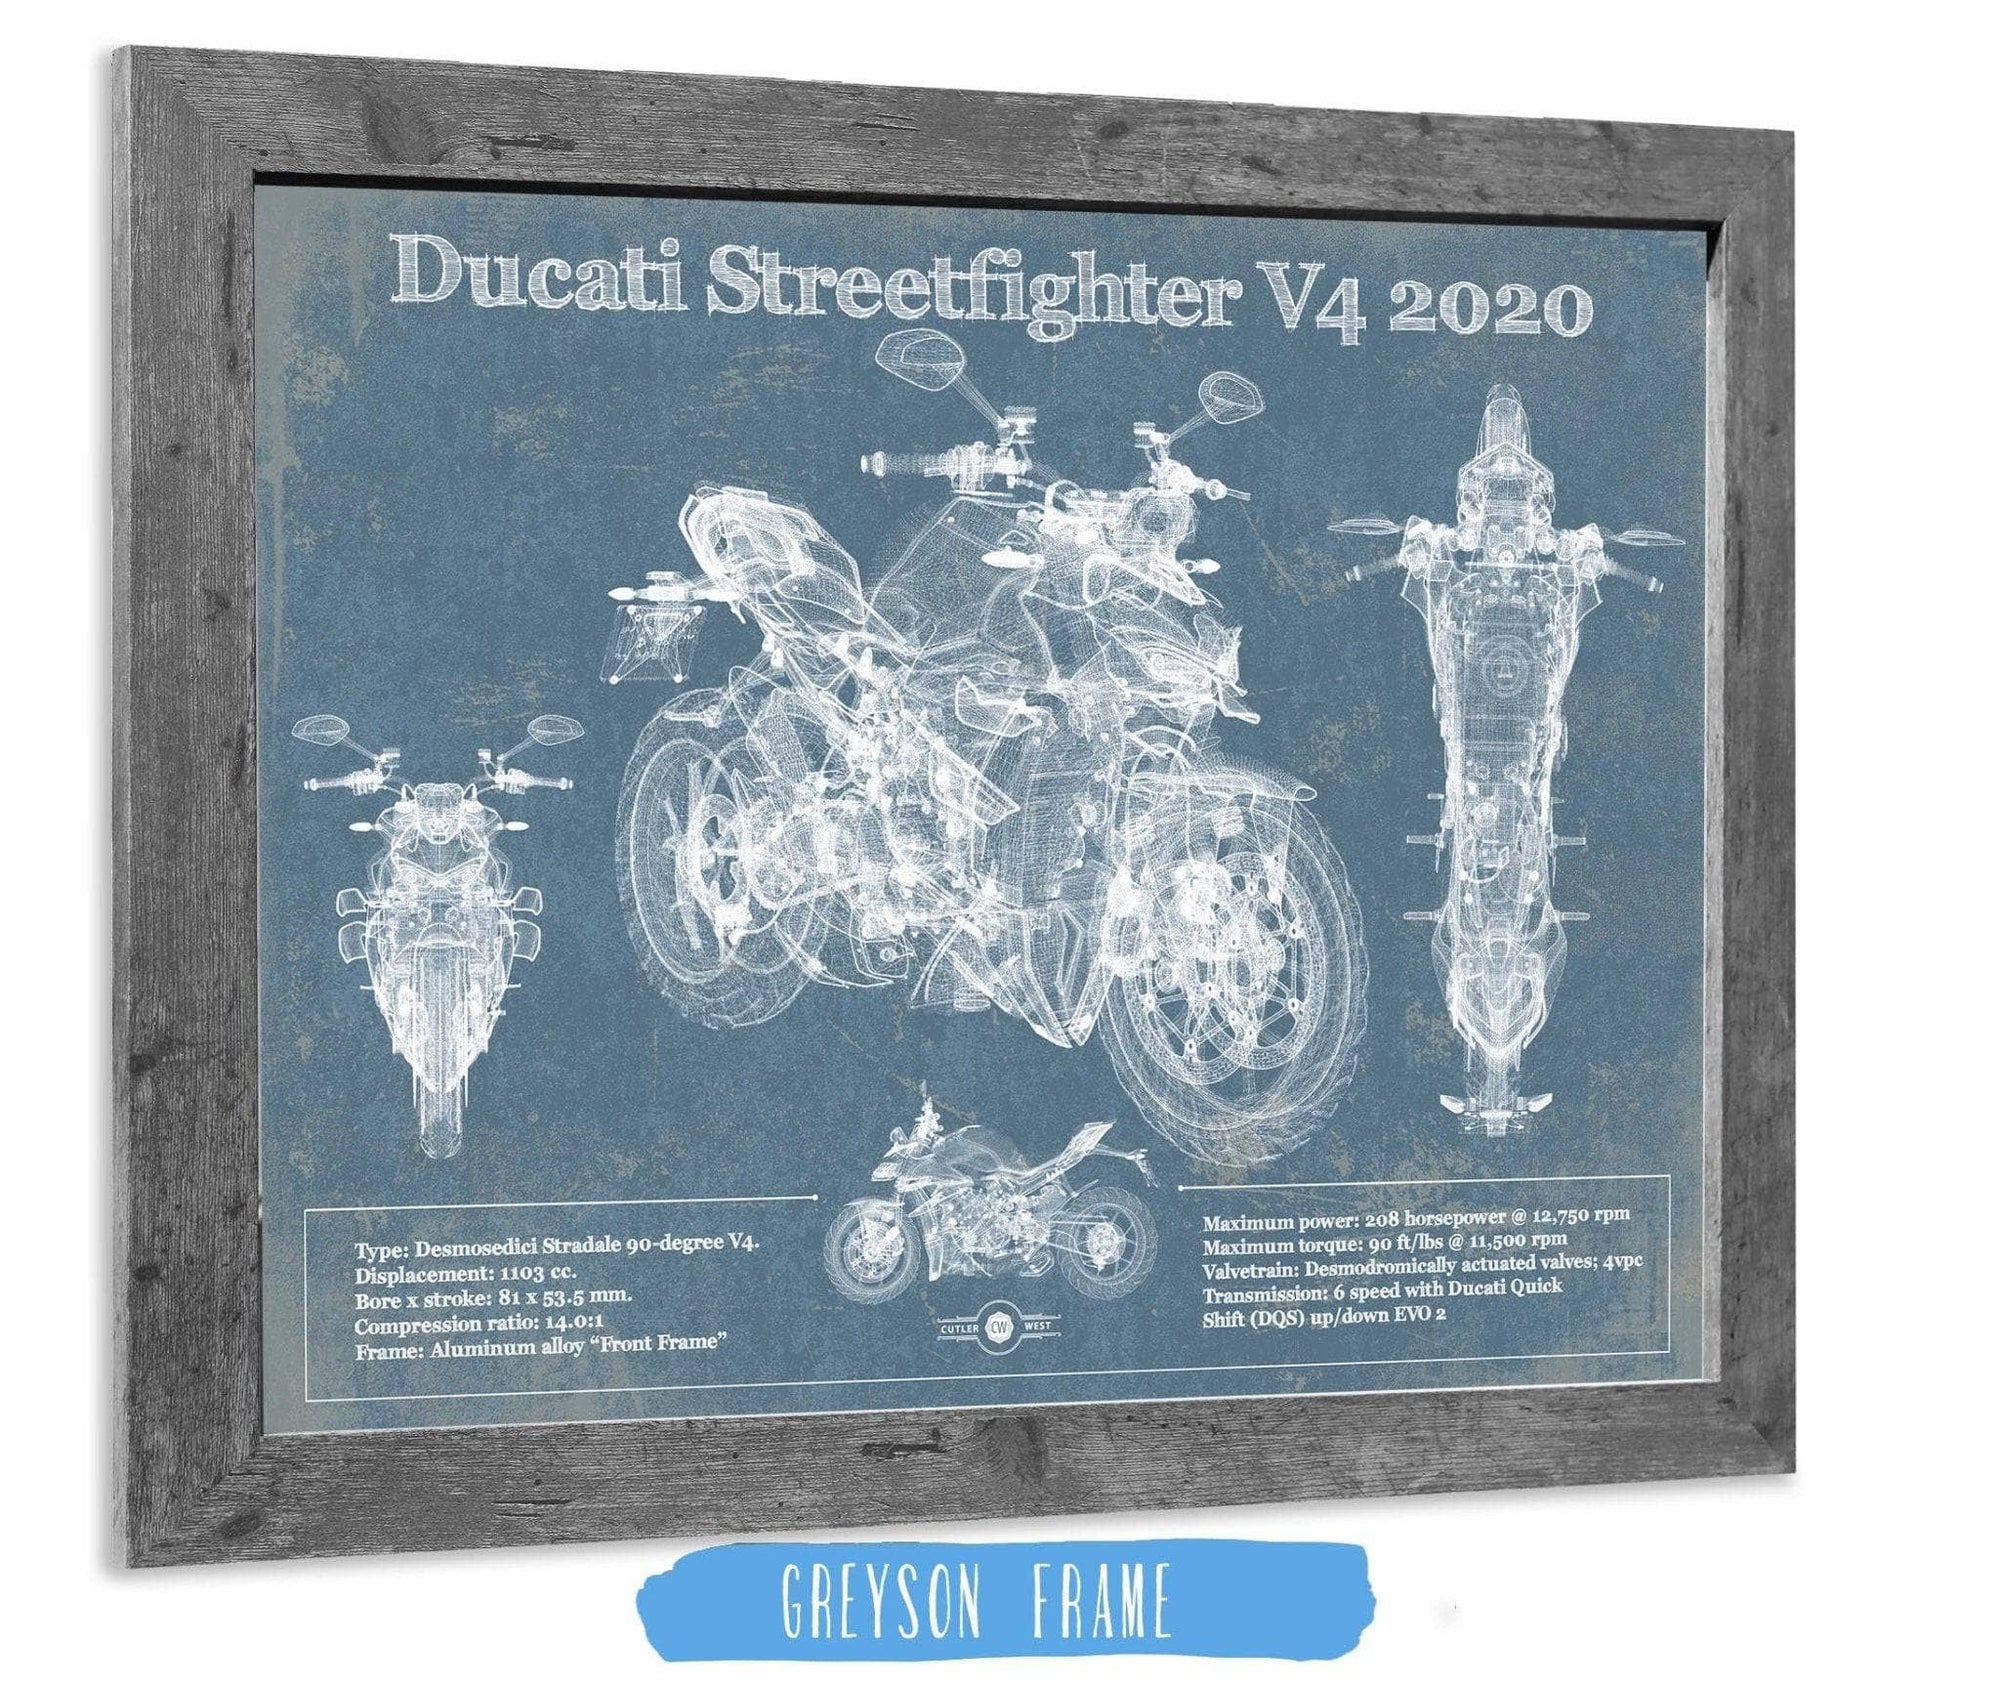 Cutler West 14" x 11" / Greyson Frame & Mat Ducati Streetfighter V4 2020 Blueprint Motorcycle Patent Print 845000240_61153